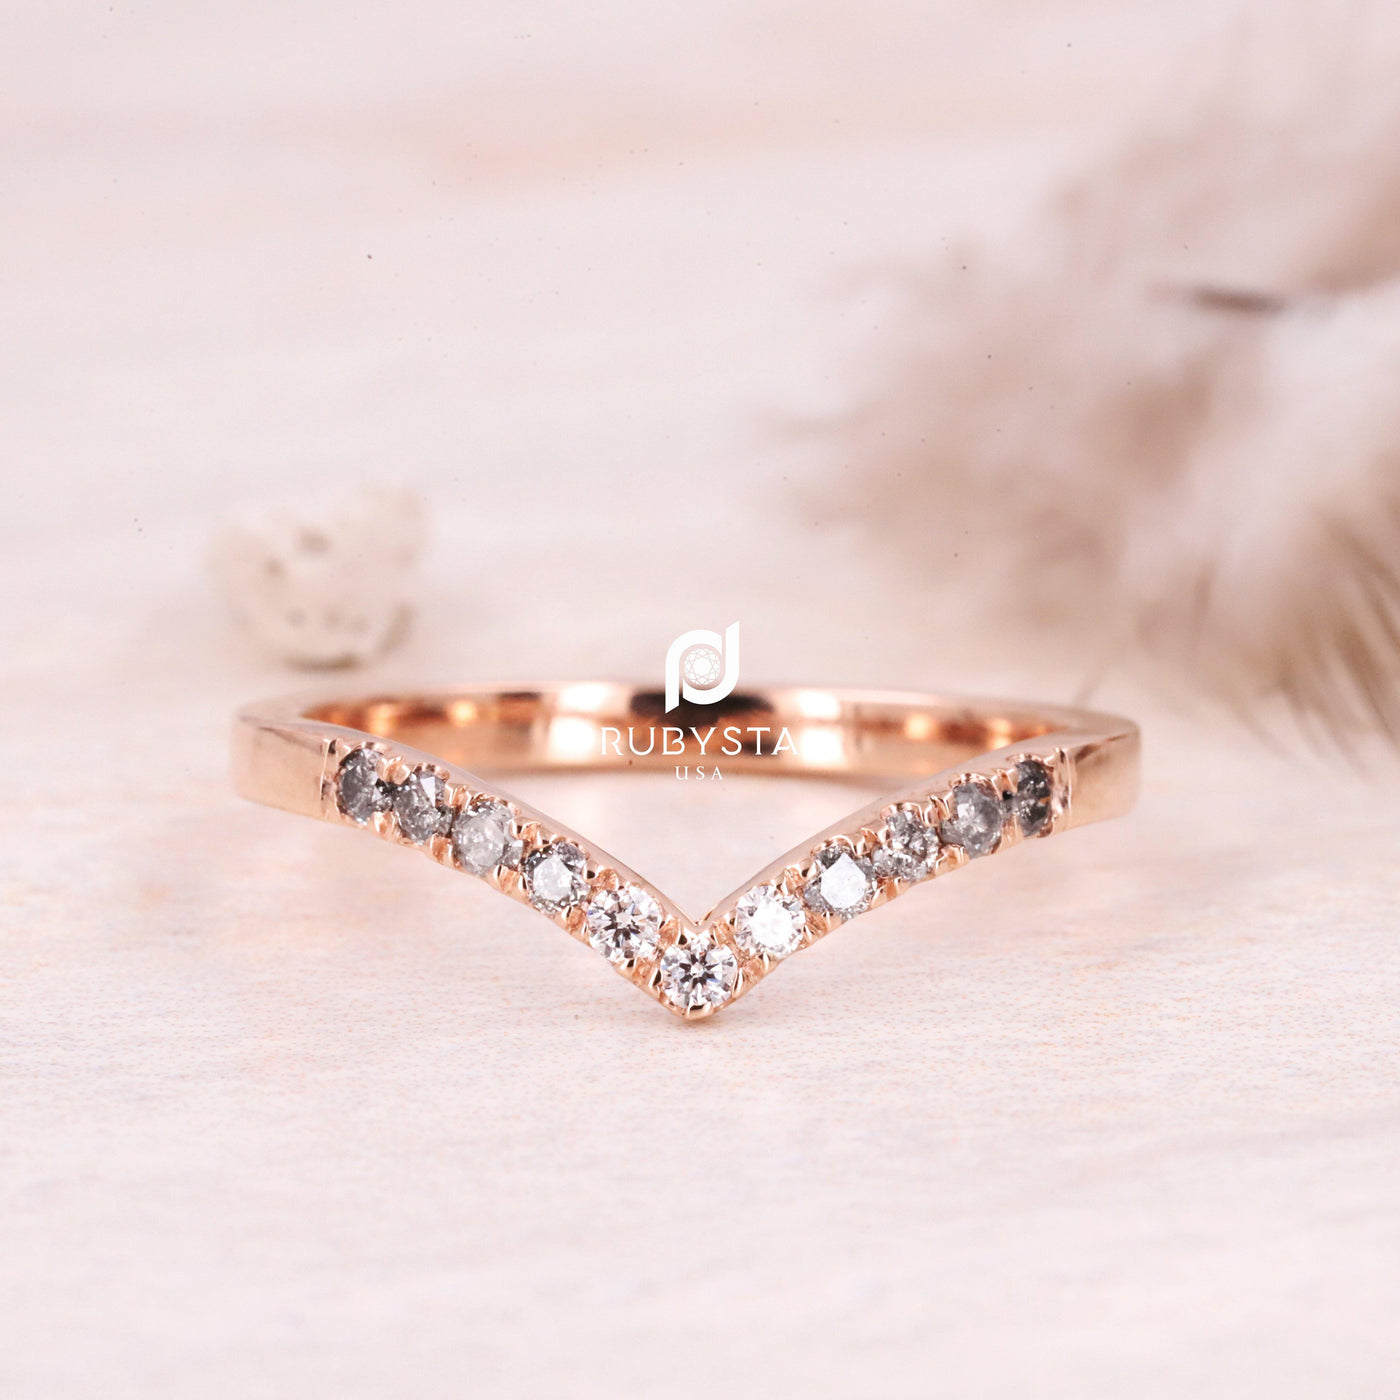 Salt and Pepper diamond Ring | Wedding Ring | Proposal Ring - Rubysta